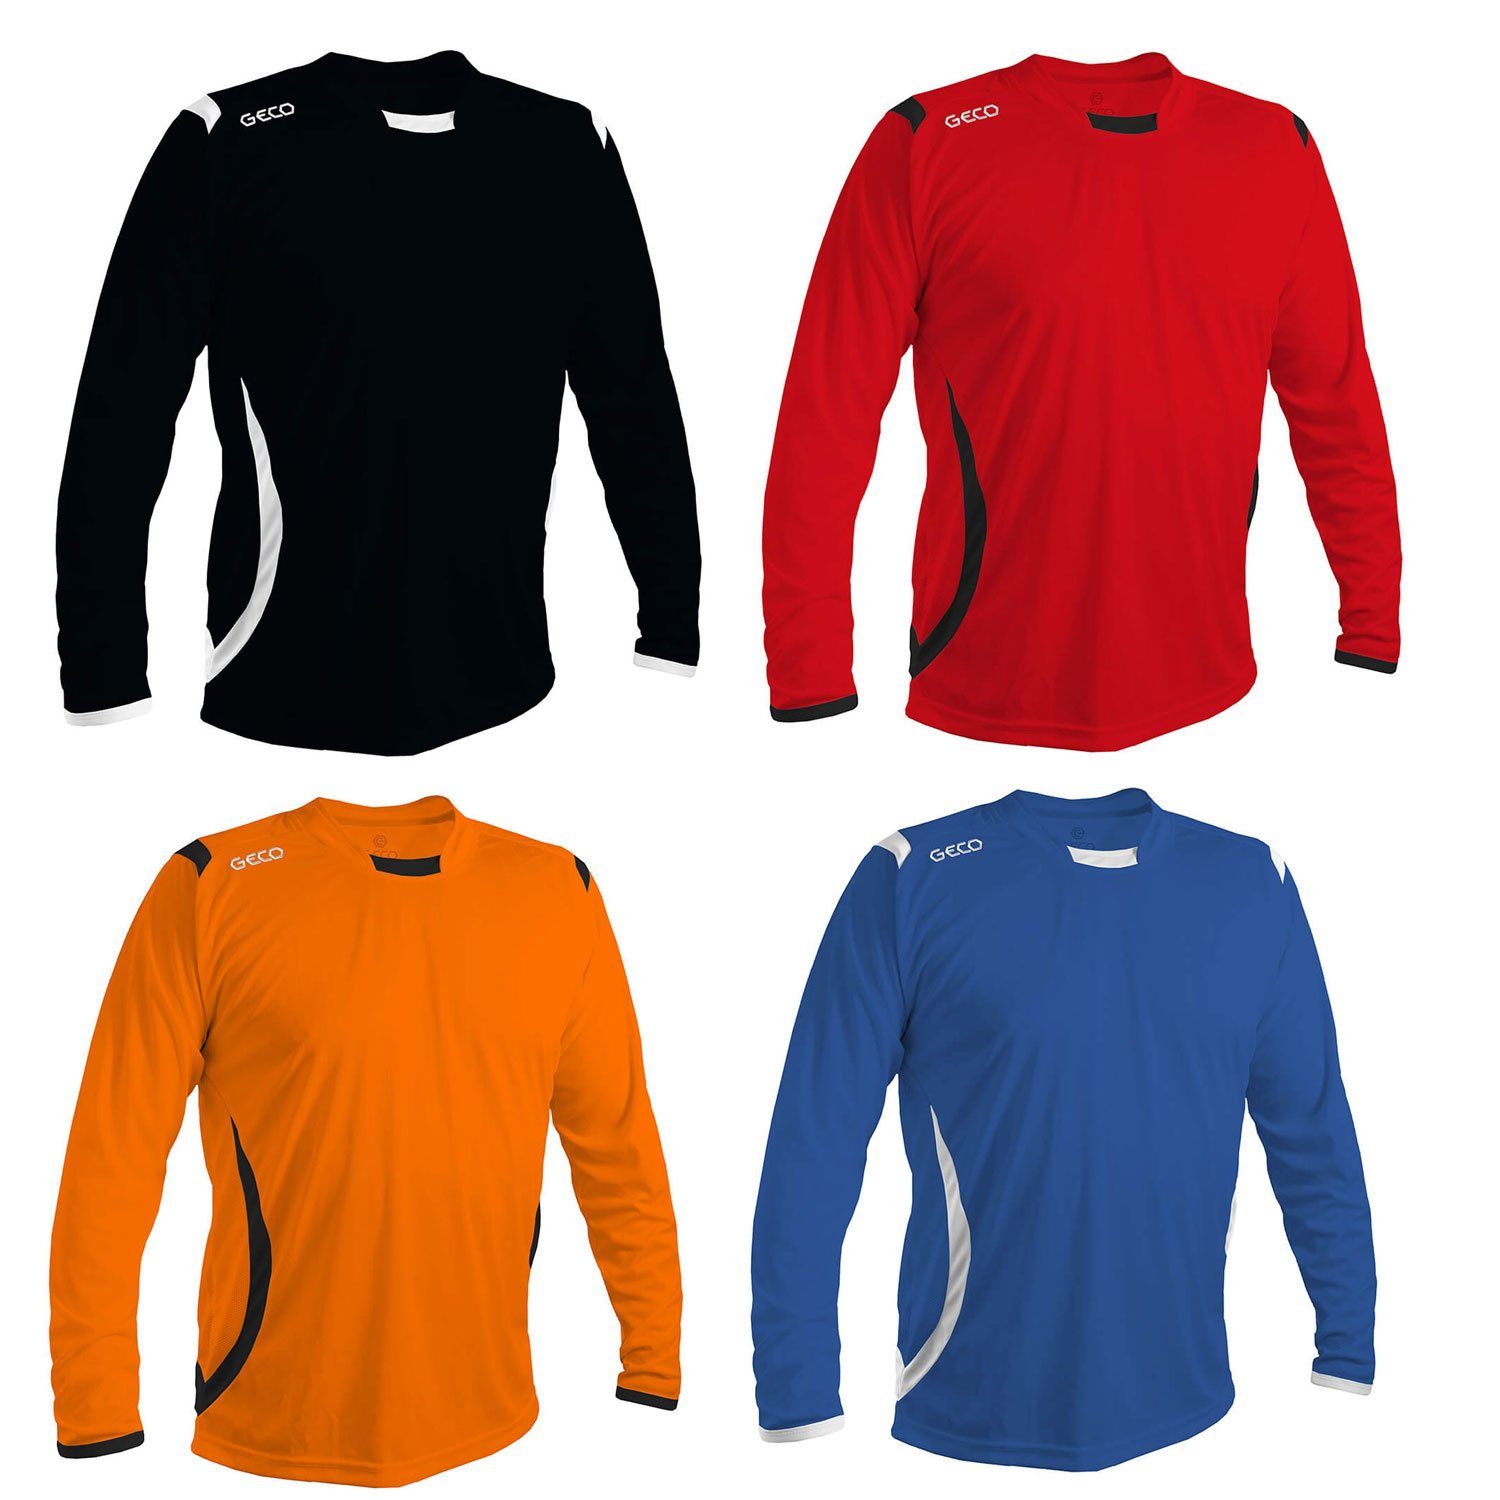 zweifarbig Levante Trikot Geco Geco orange/schwarz Fußball langarm Sportswear Fußballtrikot